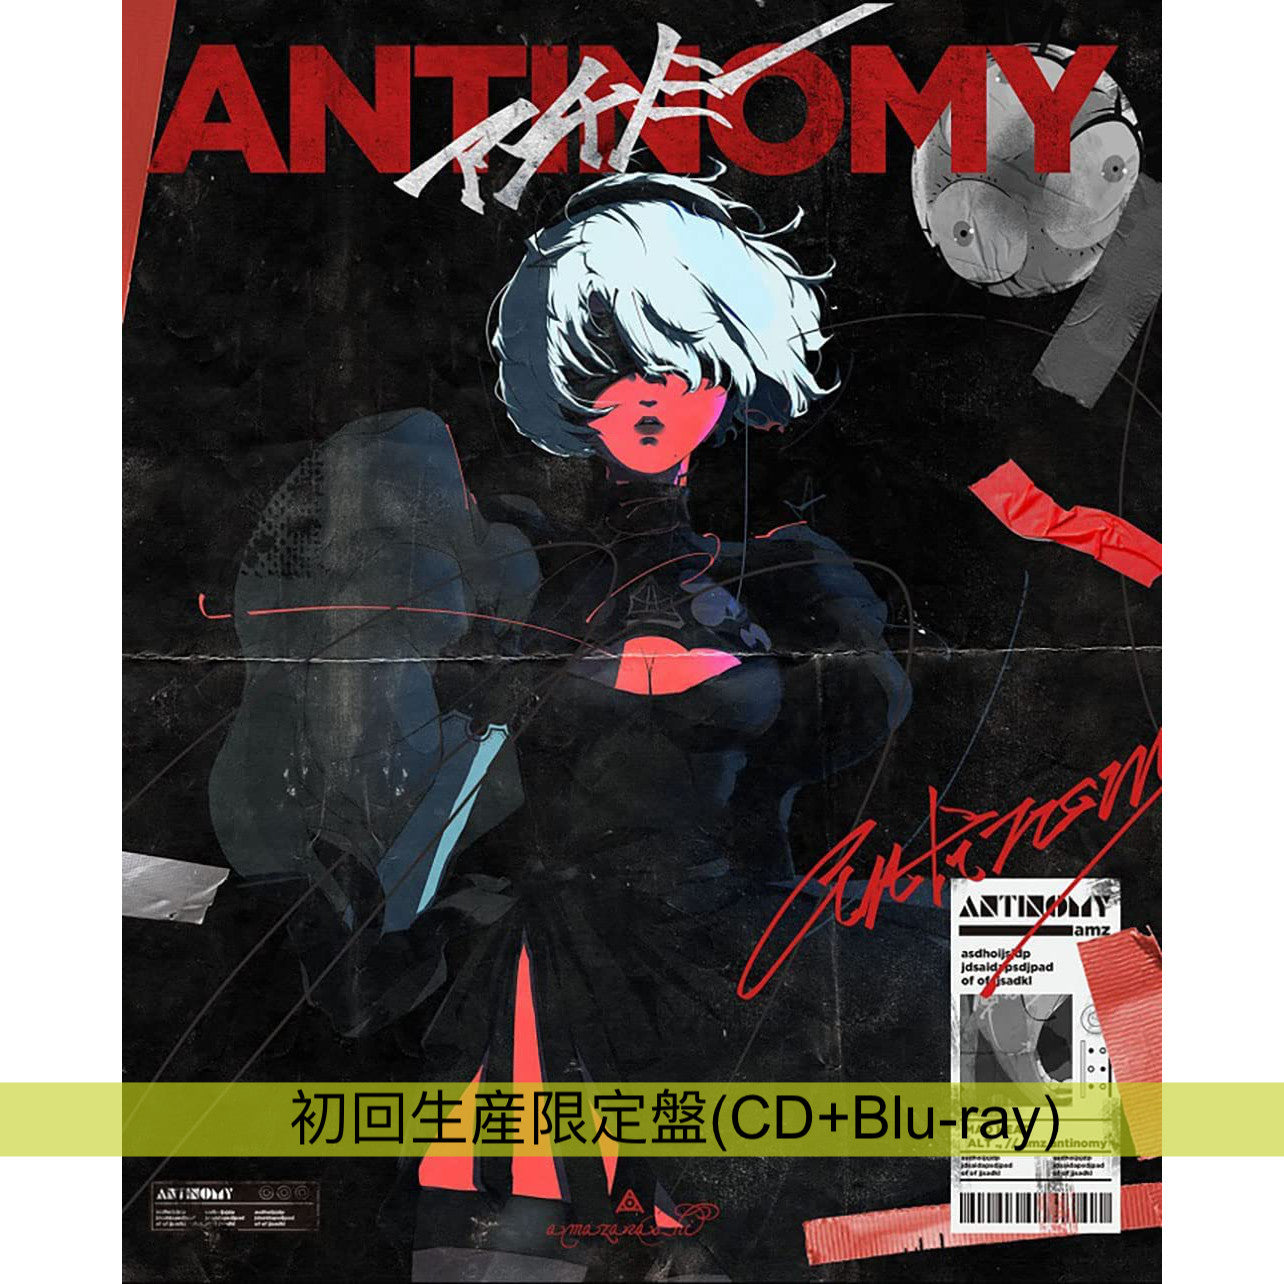 amazarashi 最新單曲CD《アンチノミー(Antinomy) 》「NieR:Automata Ver1.1a」片尾曲